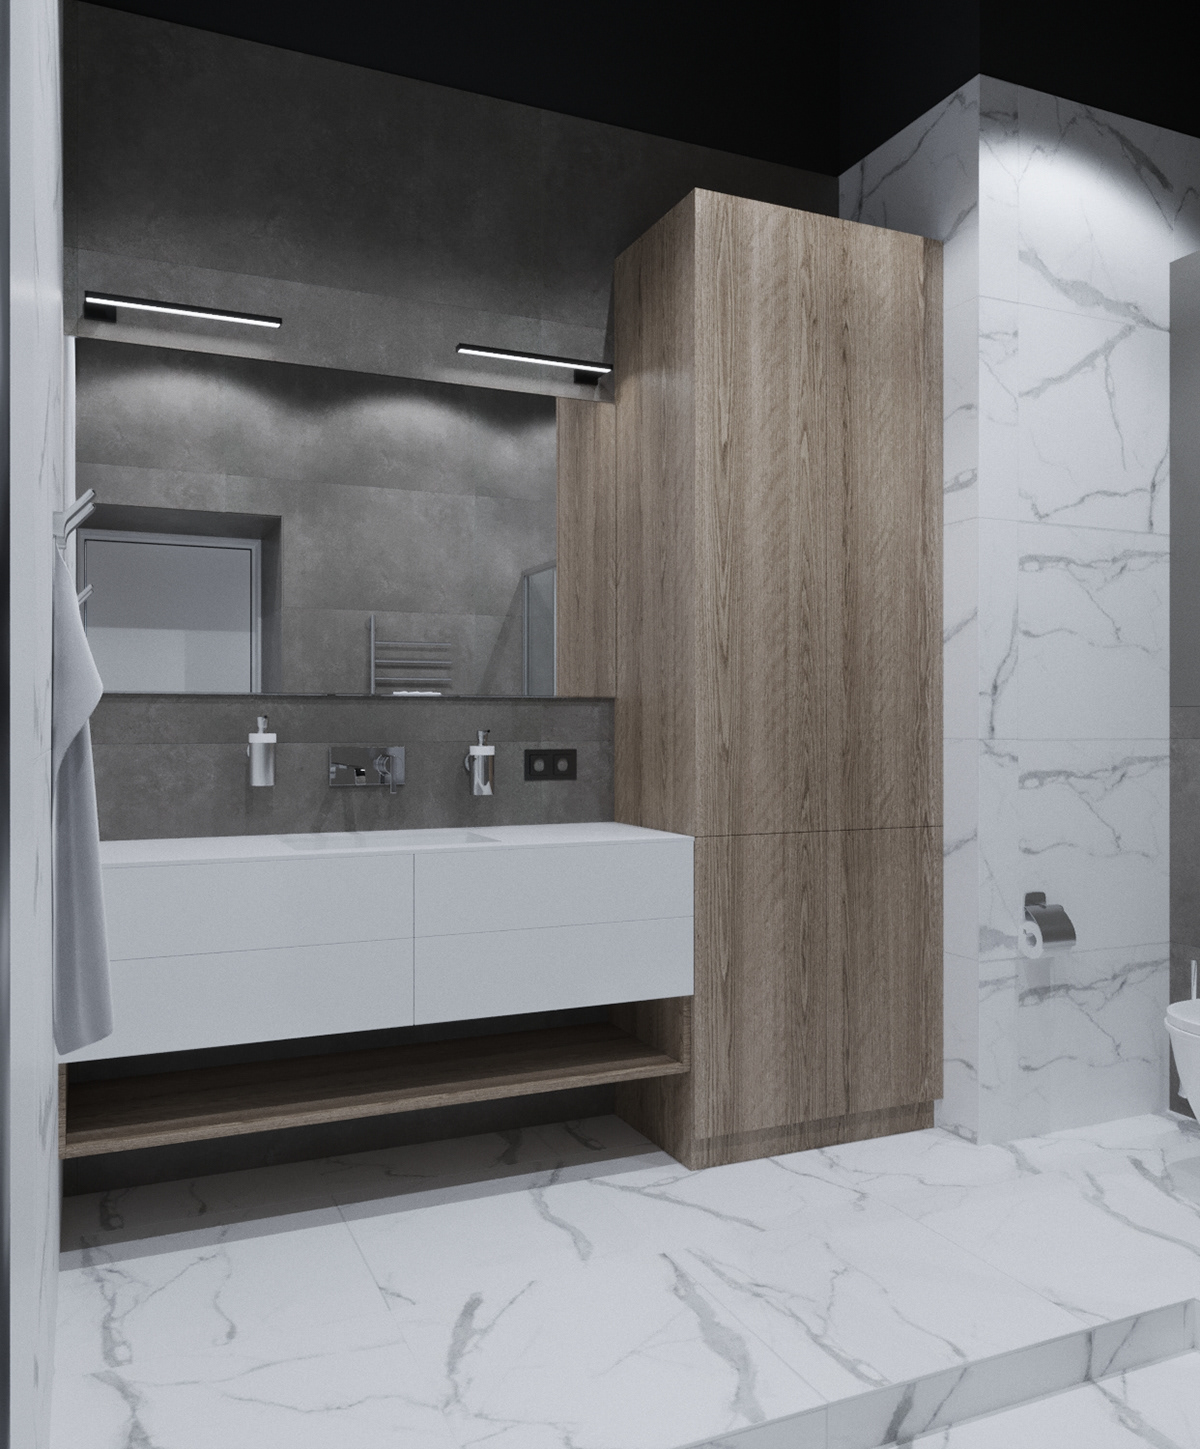 3D 3ds max CGI corona house Interior interior design  Render smarthouse visualization